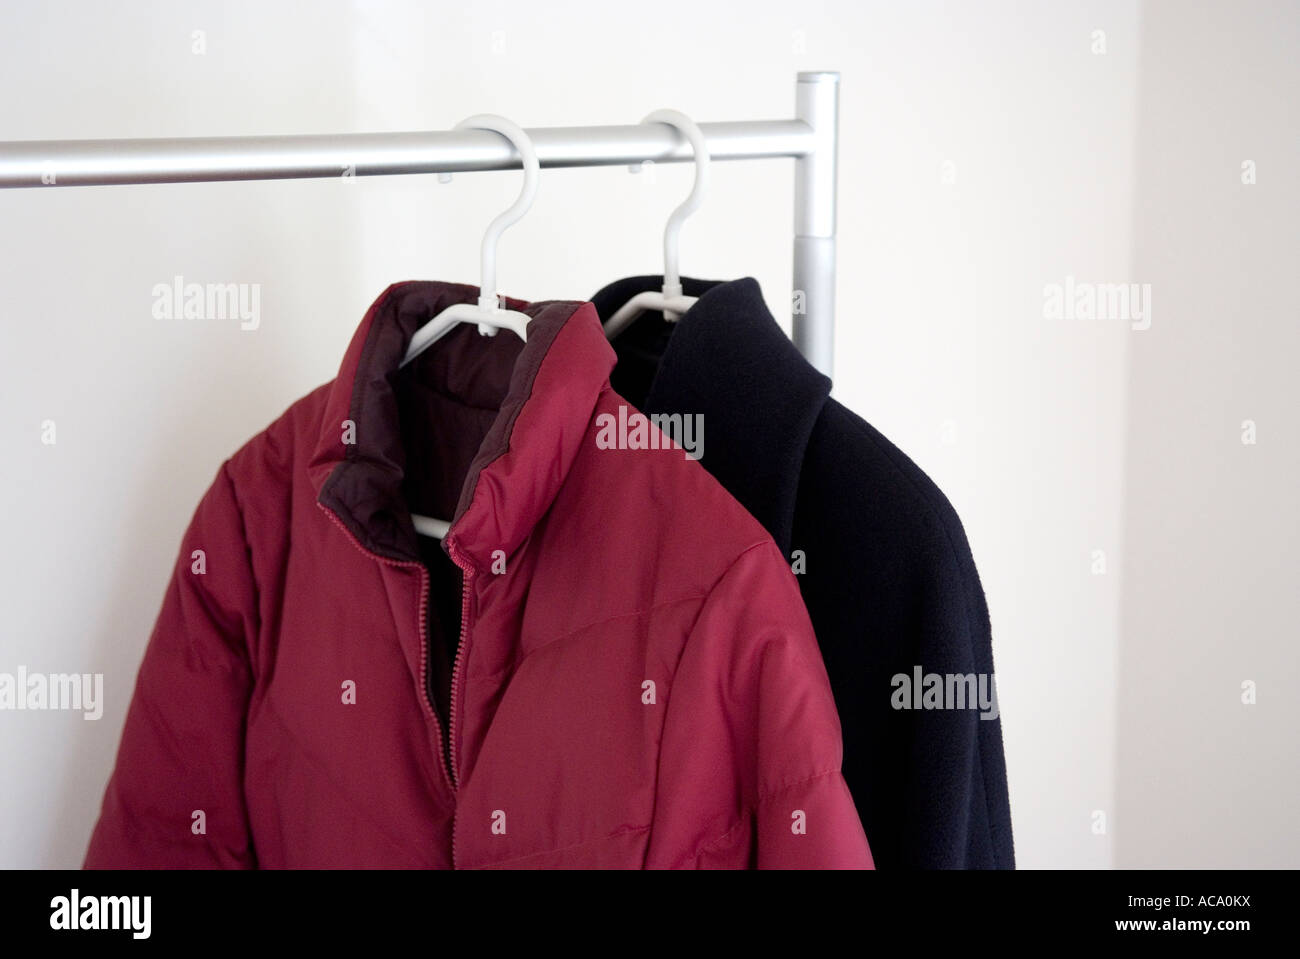 Jackets hanging on coat hanger Stock Photo